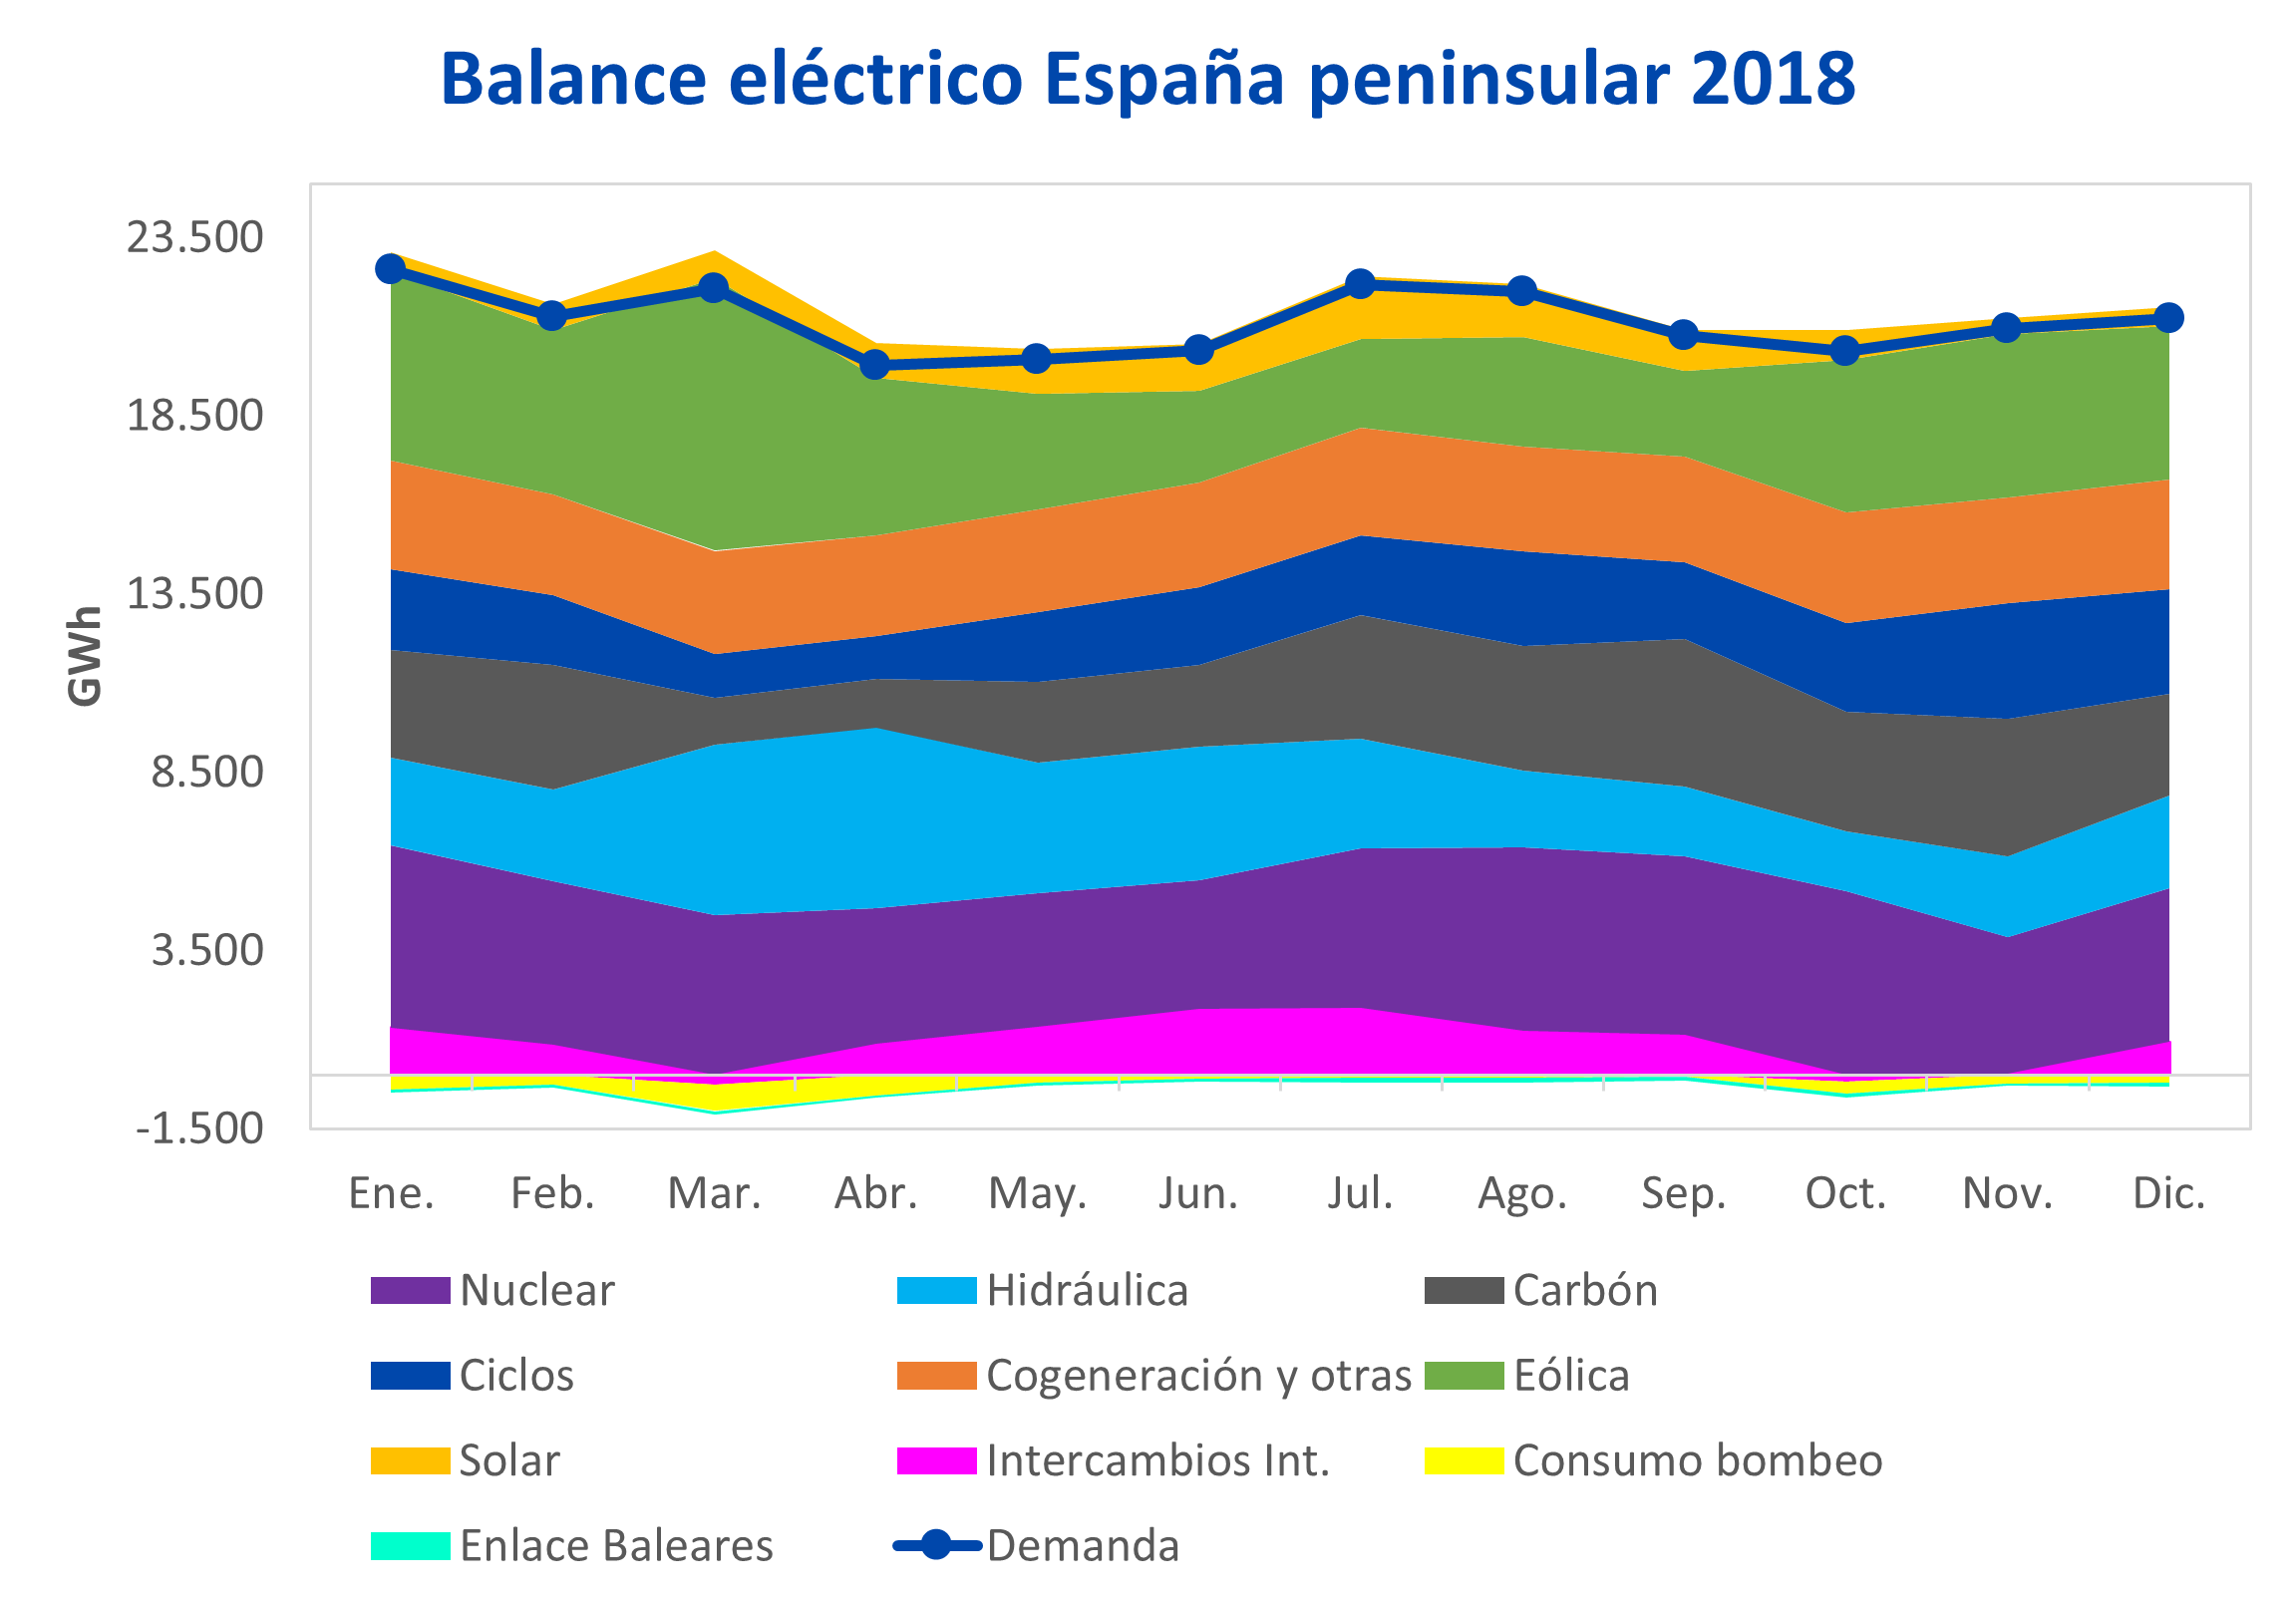 AleaSoft - Balance eléctrico mensual España peninsular 2018